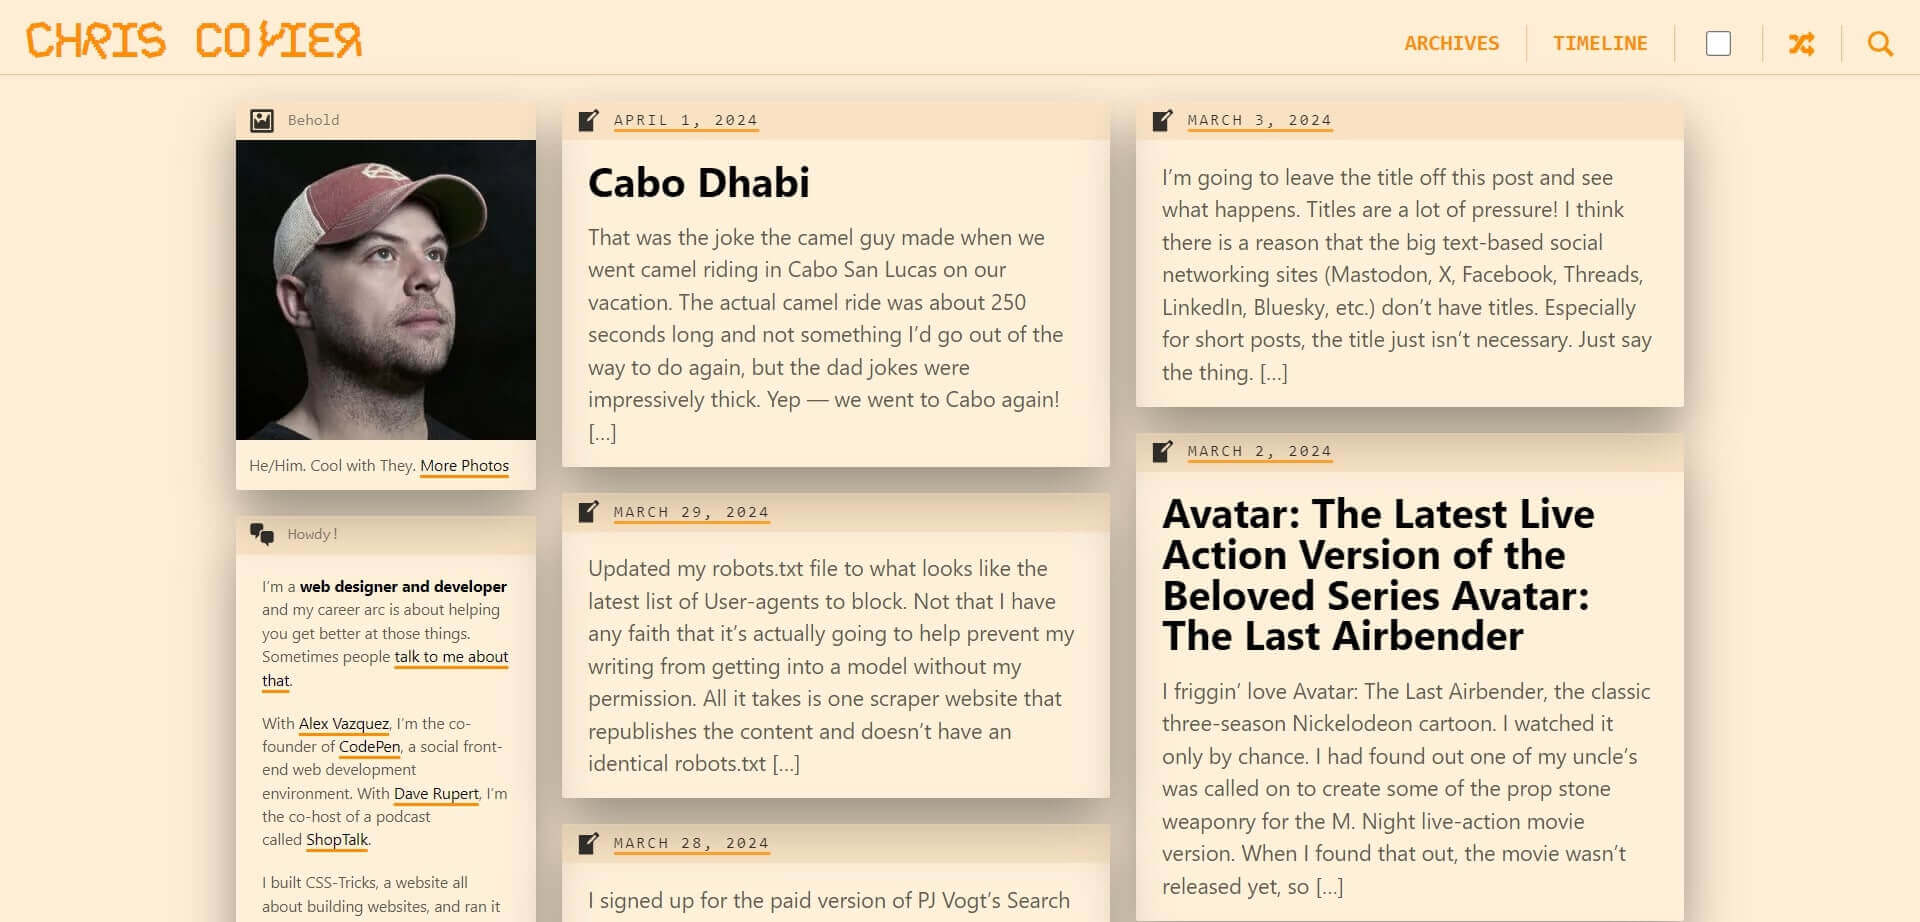 A screenshot of the website of Web Designer and Developer Chris Coyier.